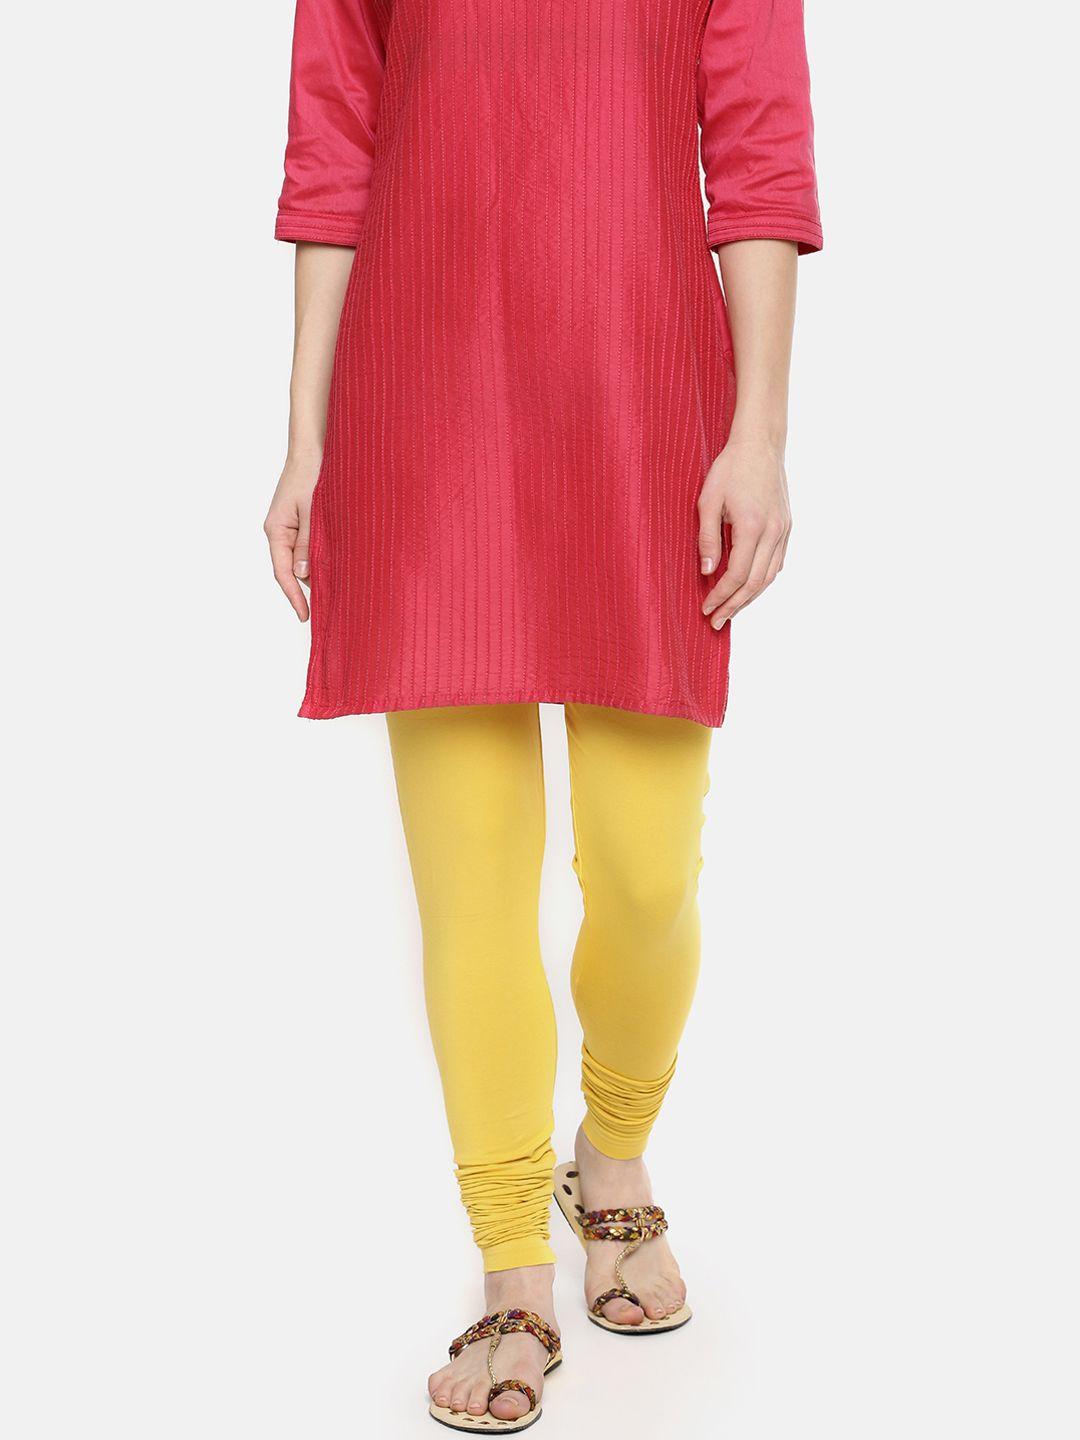 dollar-missy-women-yellow-solid-churidar-length-leggings